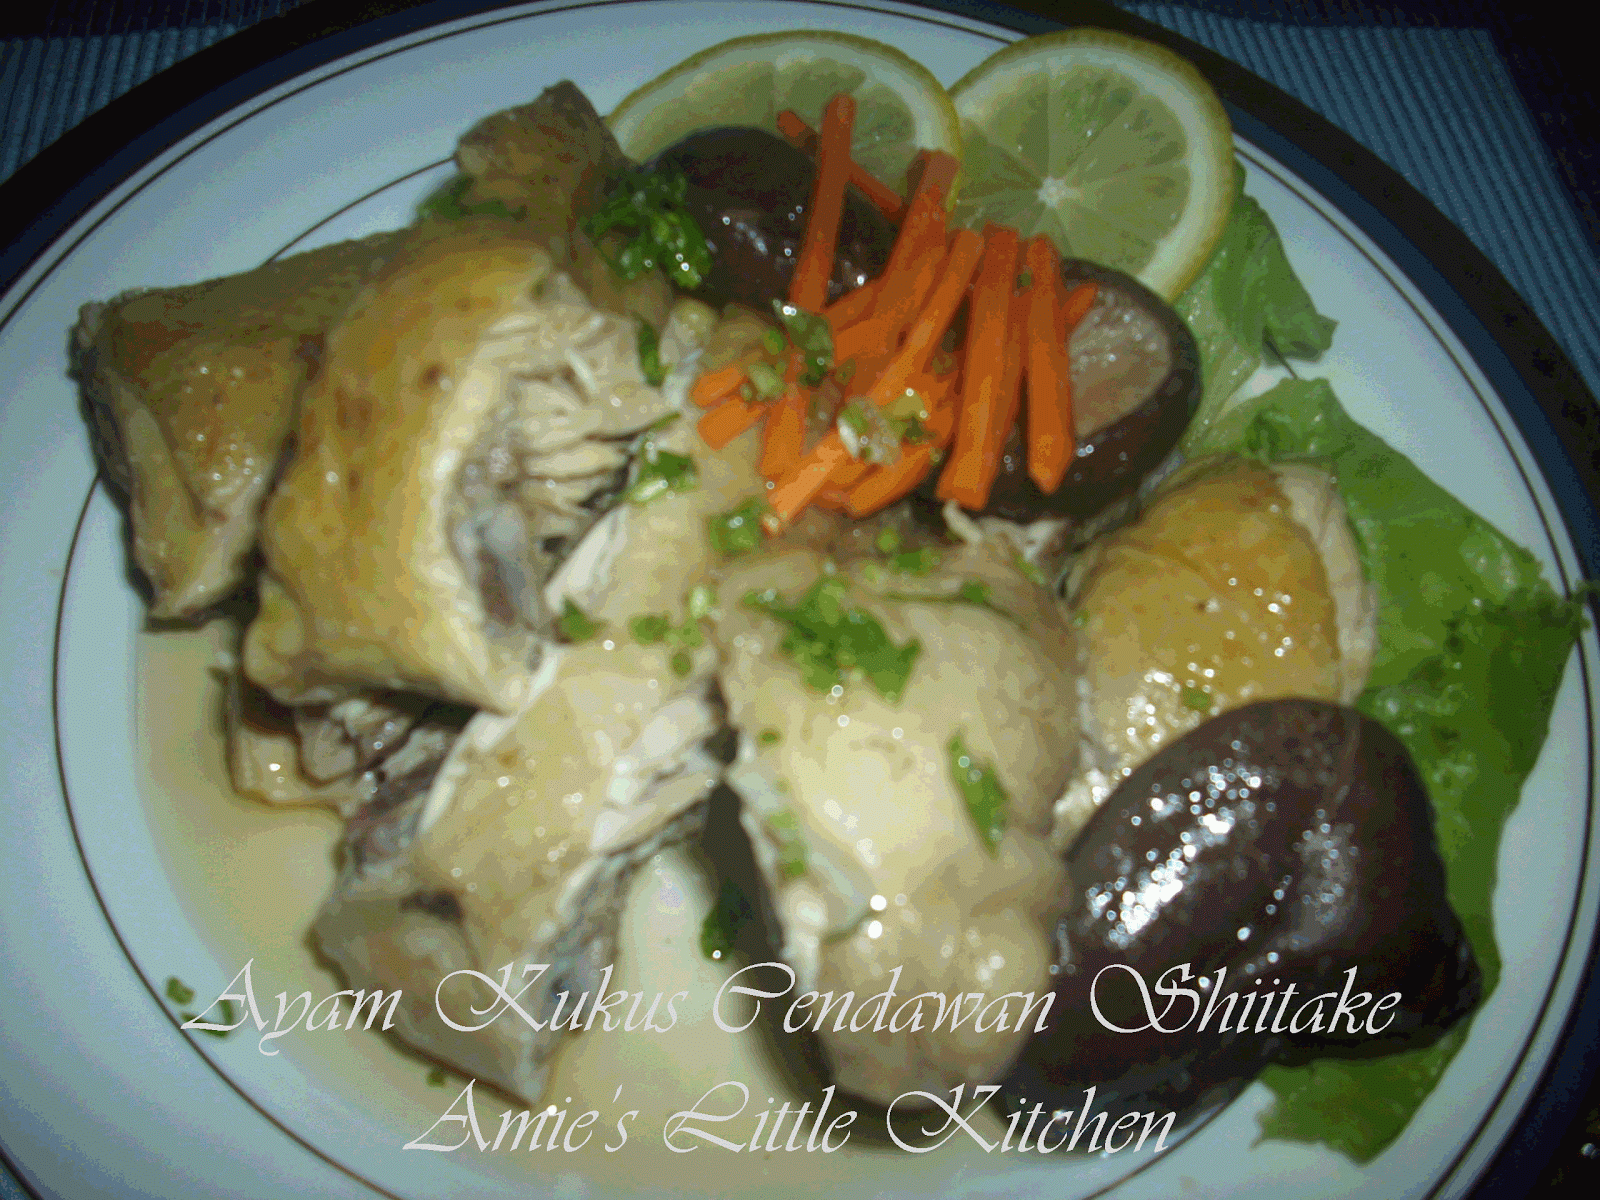 AMIE'S LITTLE KITCHEN: Ayam Kukus Cendawan Shiitake